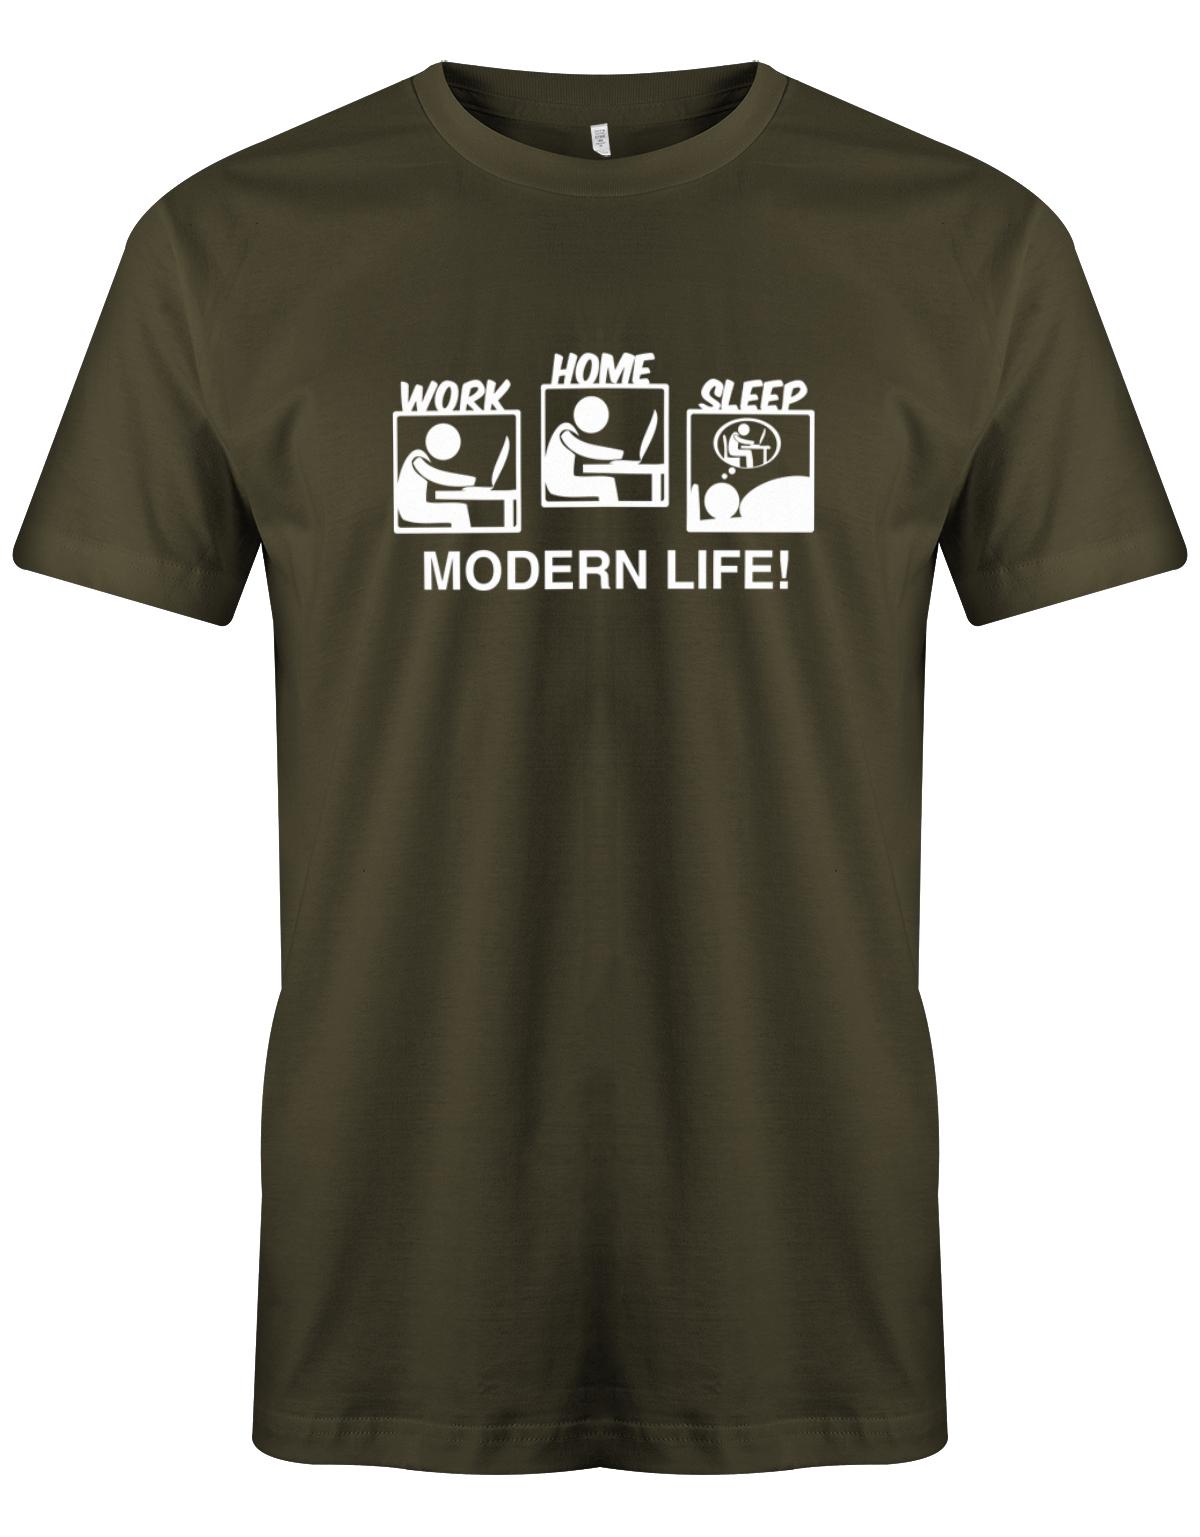 Modern-Life-Work-Home-Sleep-Herren-Gamer-Shirt-Army